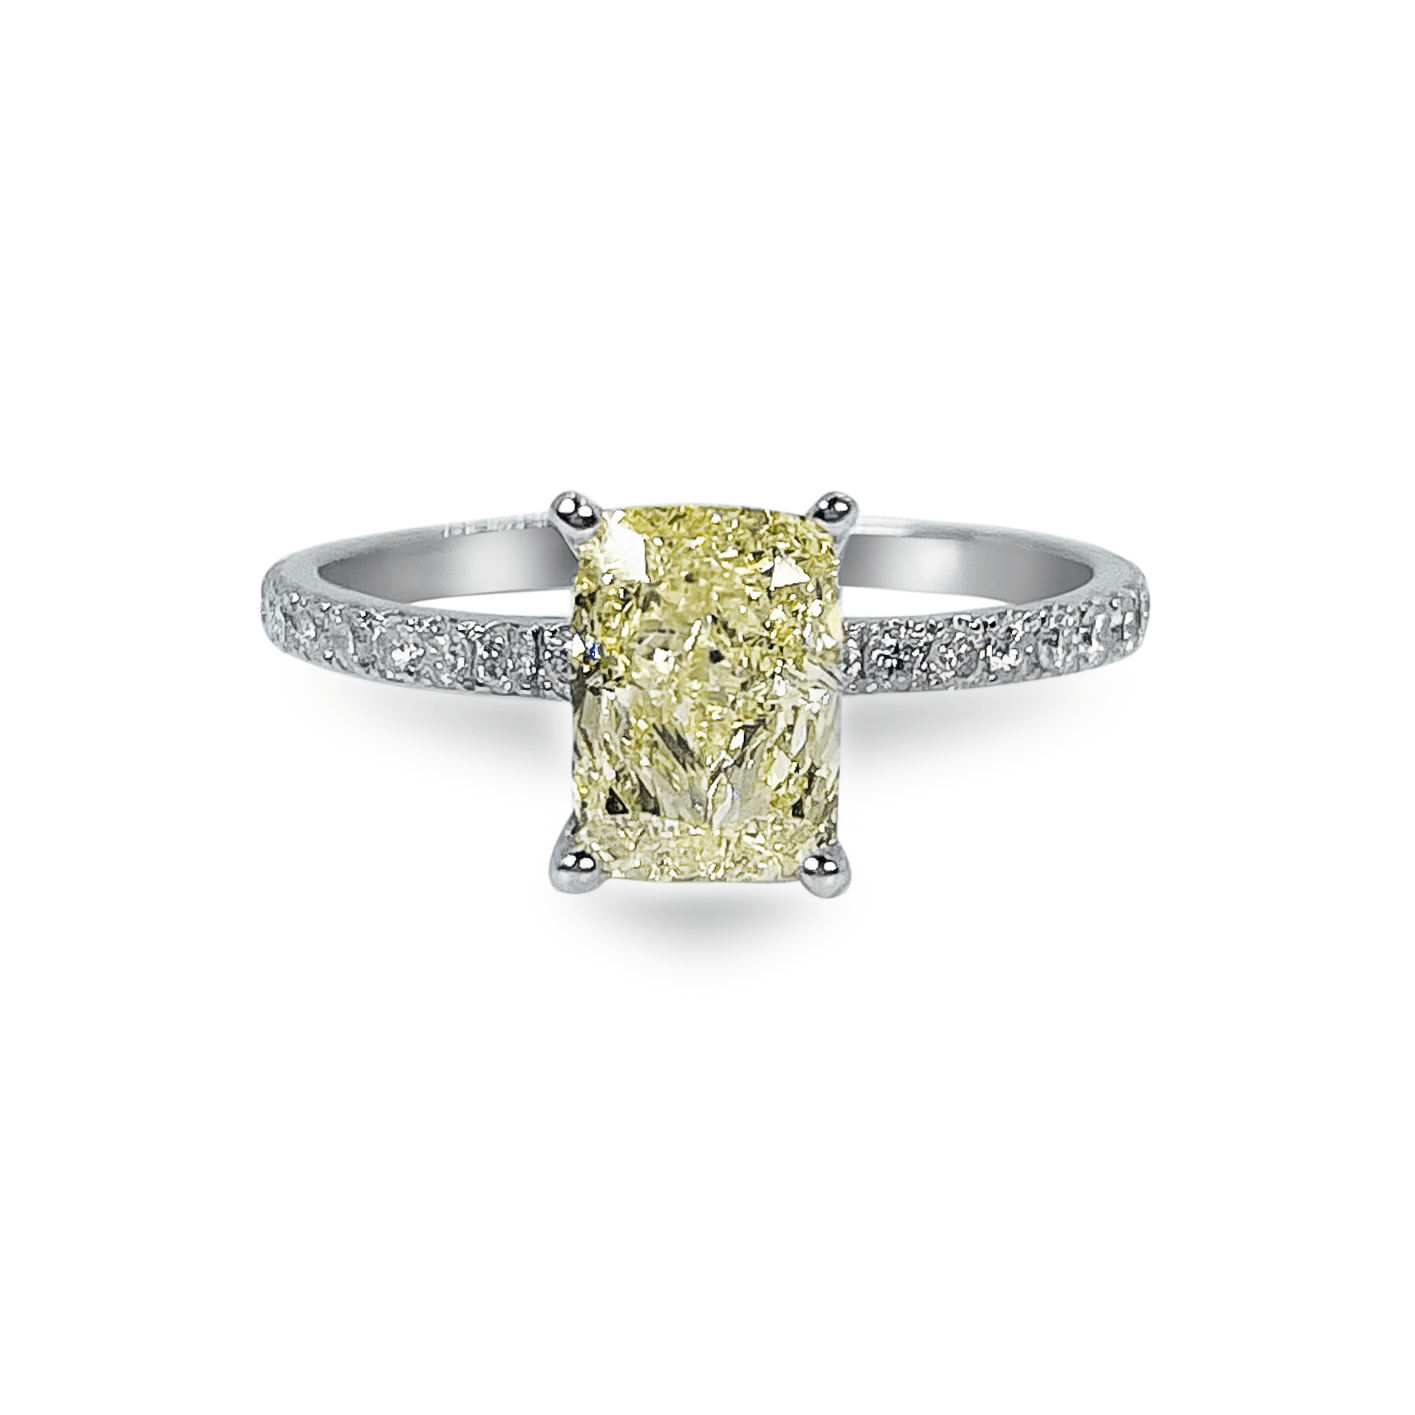 1.59 ct Yellow Cushion Cut Diamond Solitaire with Half Diamond Band in 18k White Gold- جرس - Luxury Diamond Jewelry shop Dubai - SABA DIAMONDS